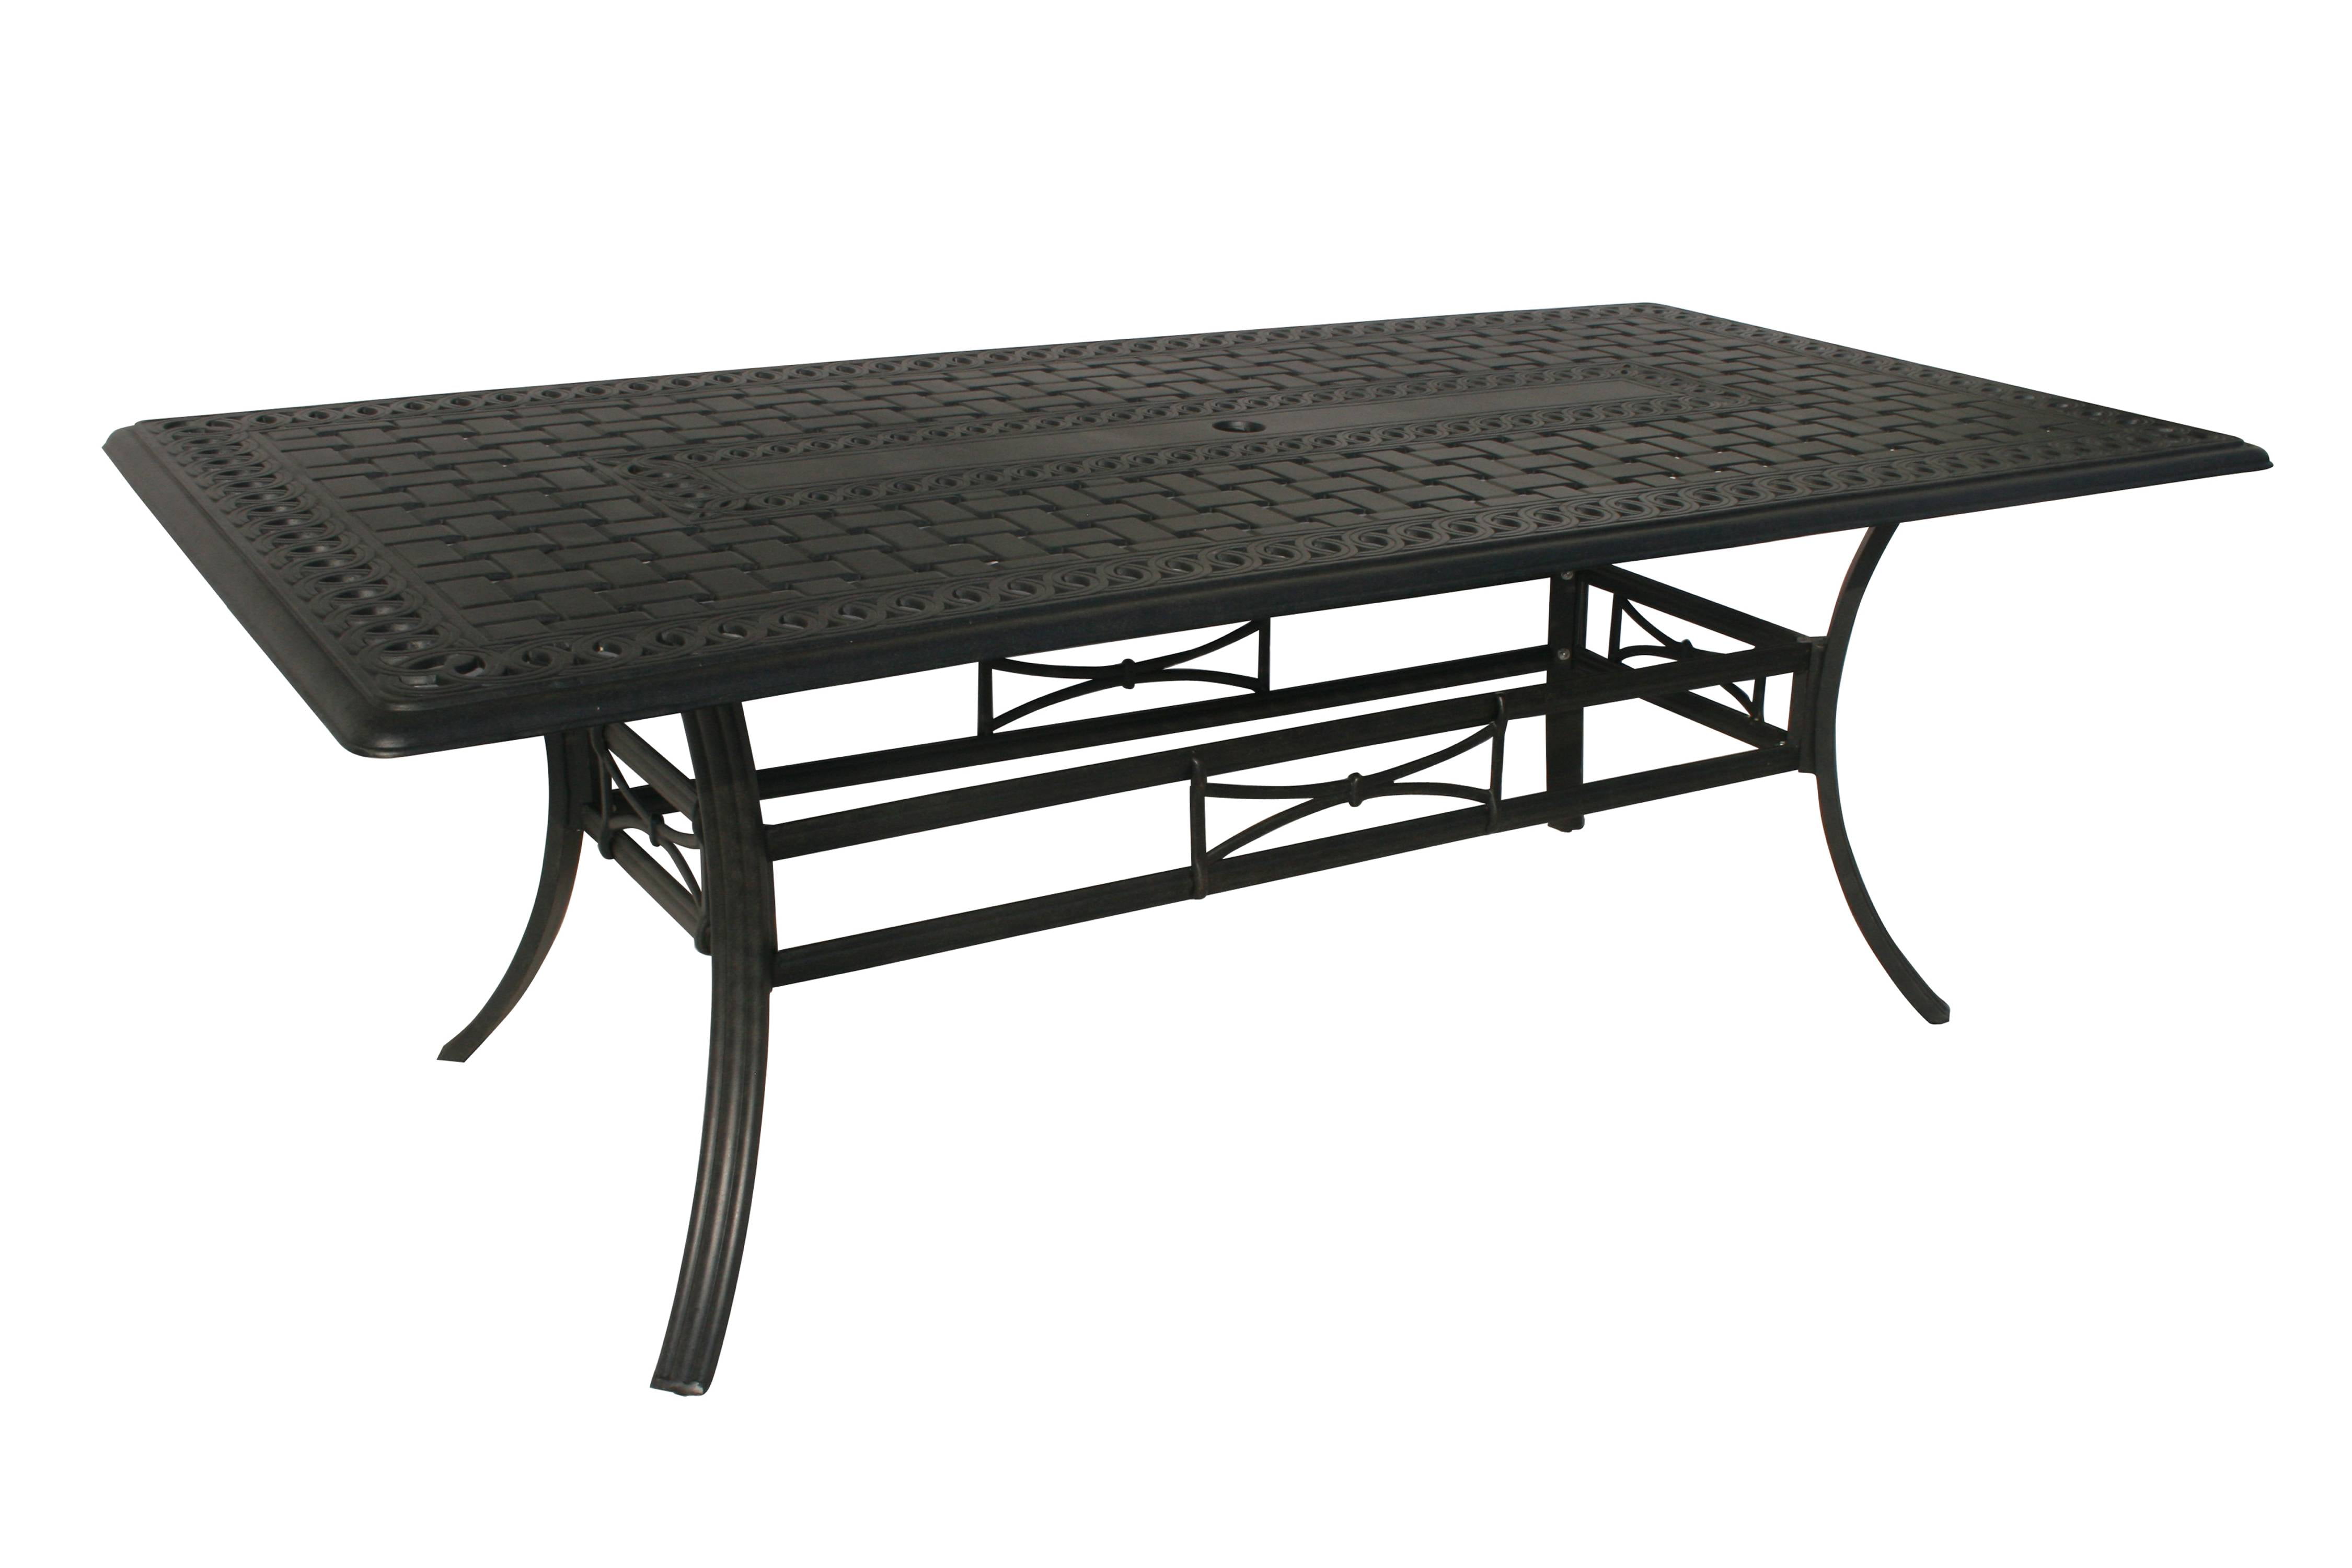 Jet Black Rectangular Aluminum Outdoor, Outdoor Dining Tables With Umbrella Hole